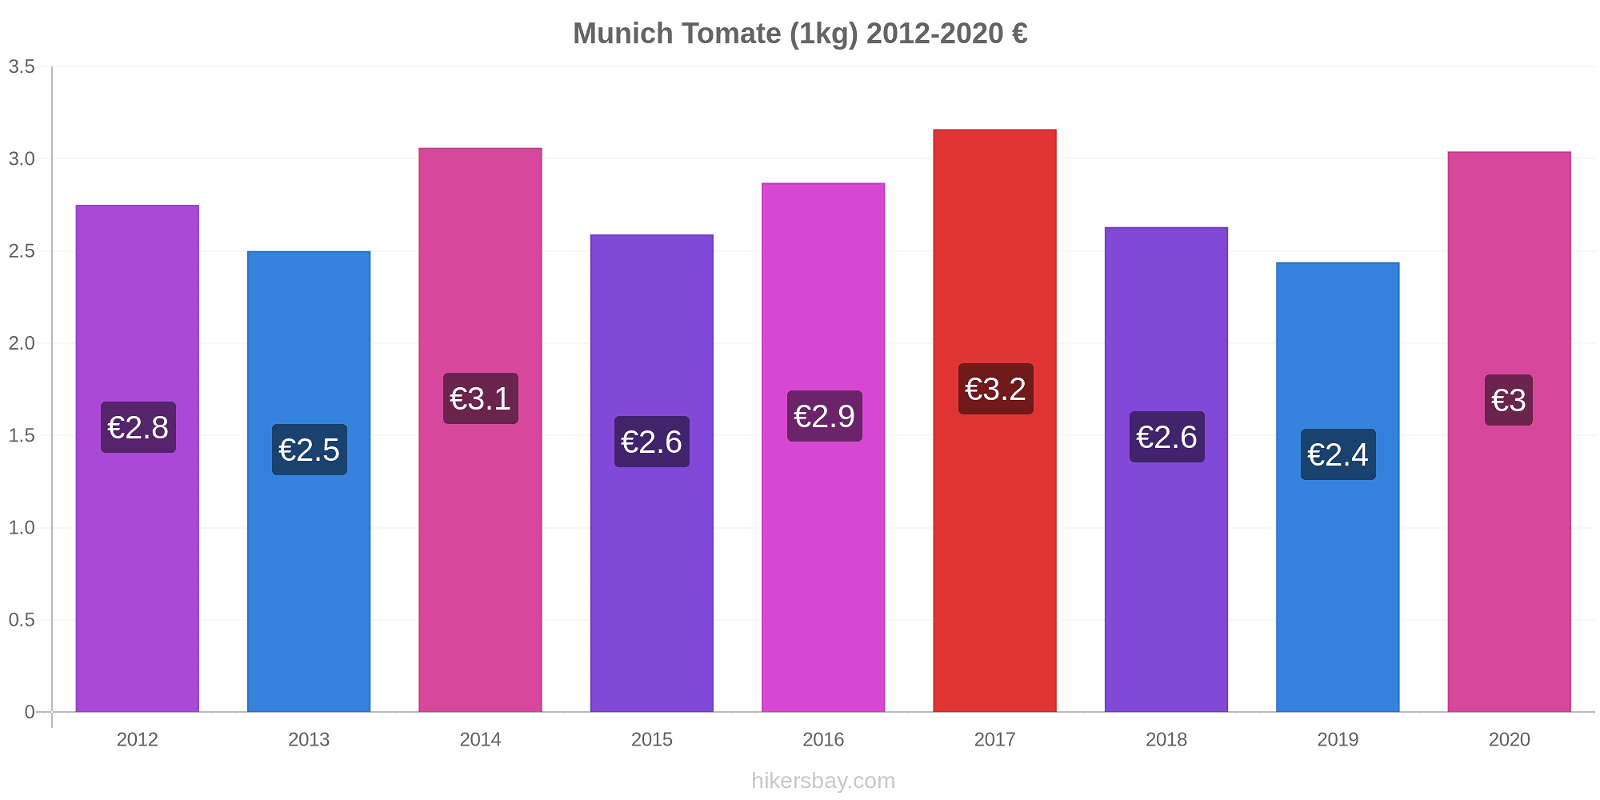 Munich changements de prix Tomate (1kg) hikersbay.com